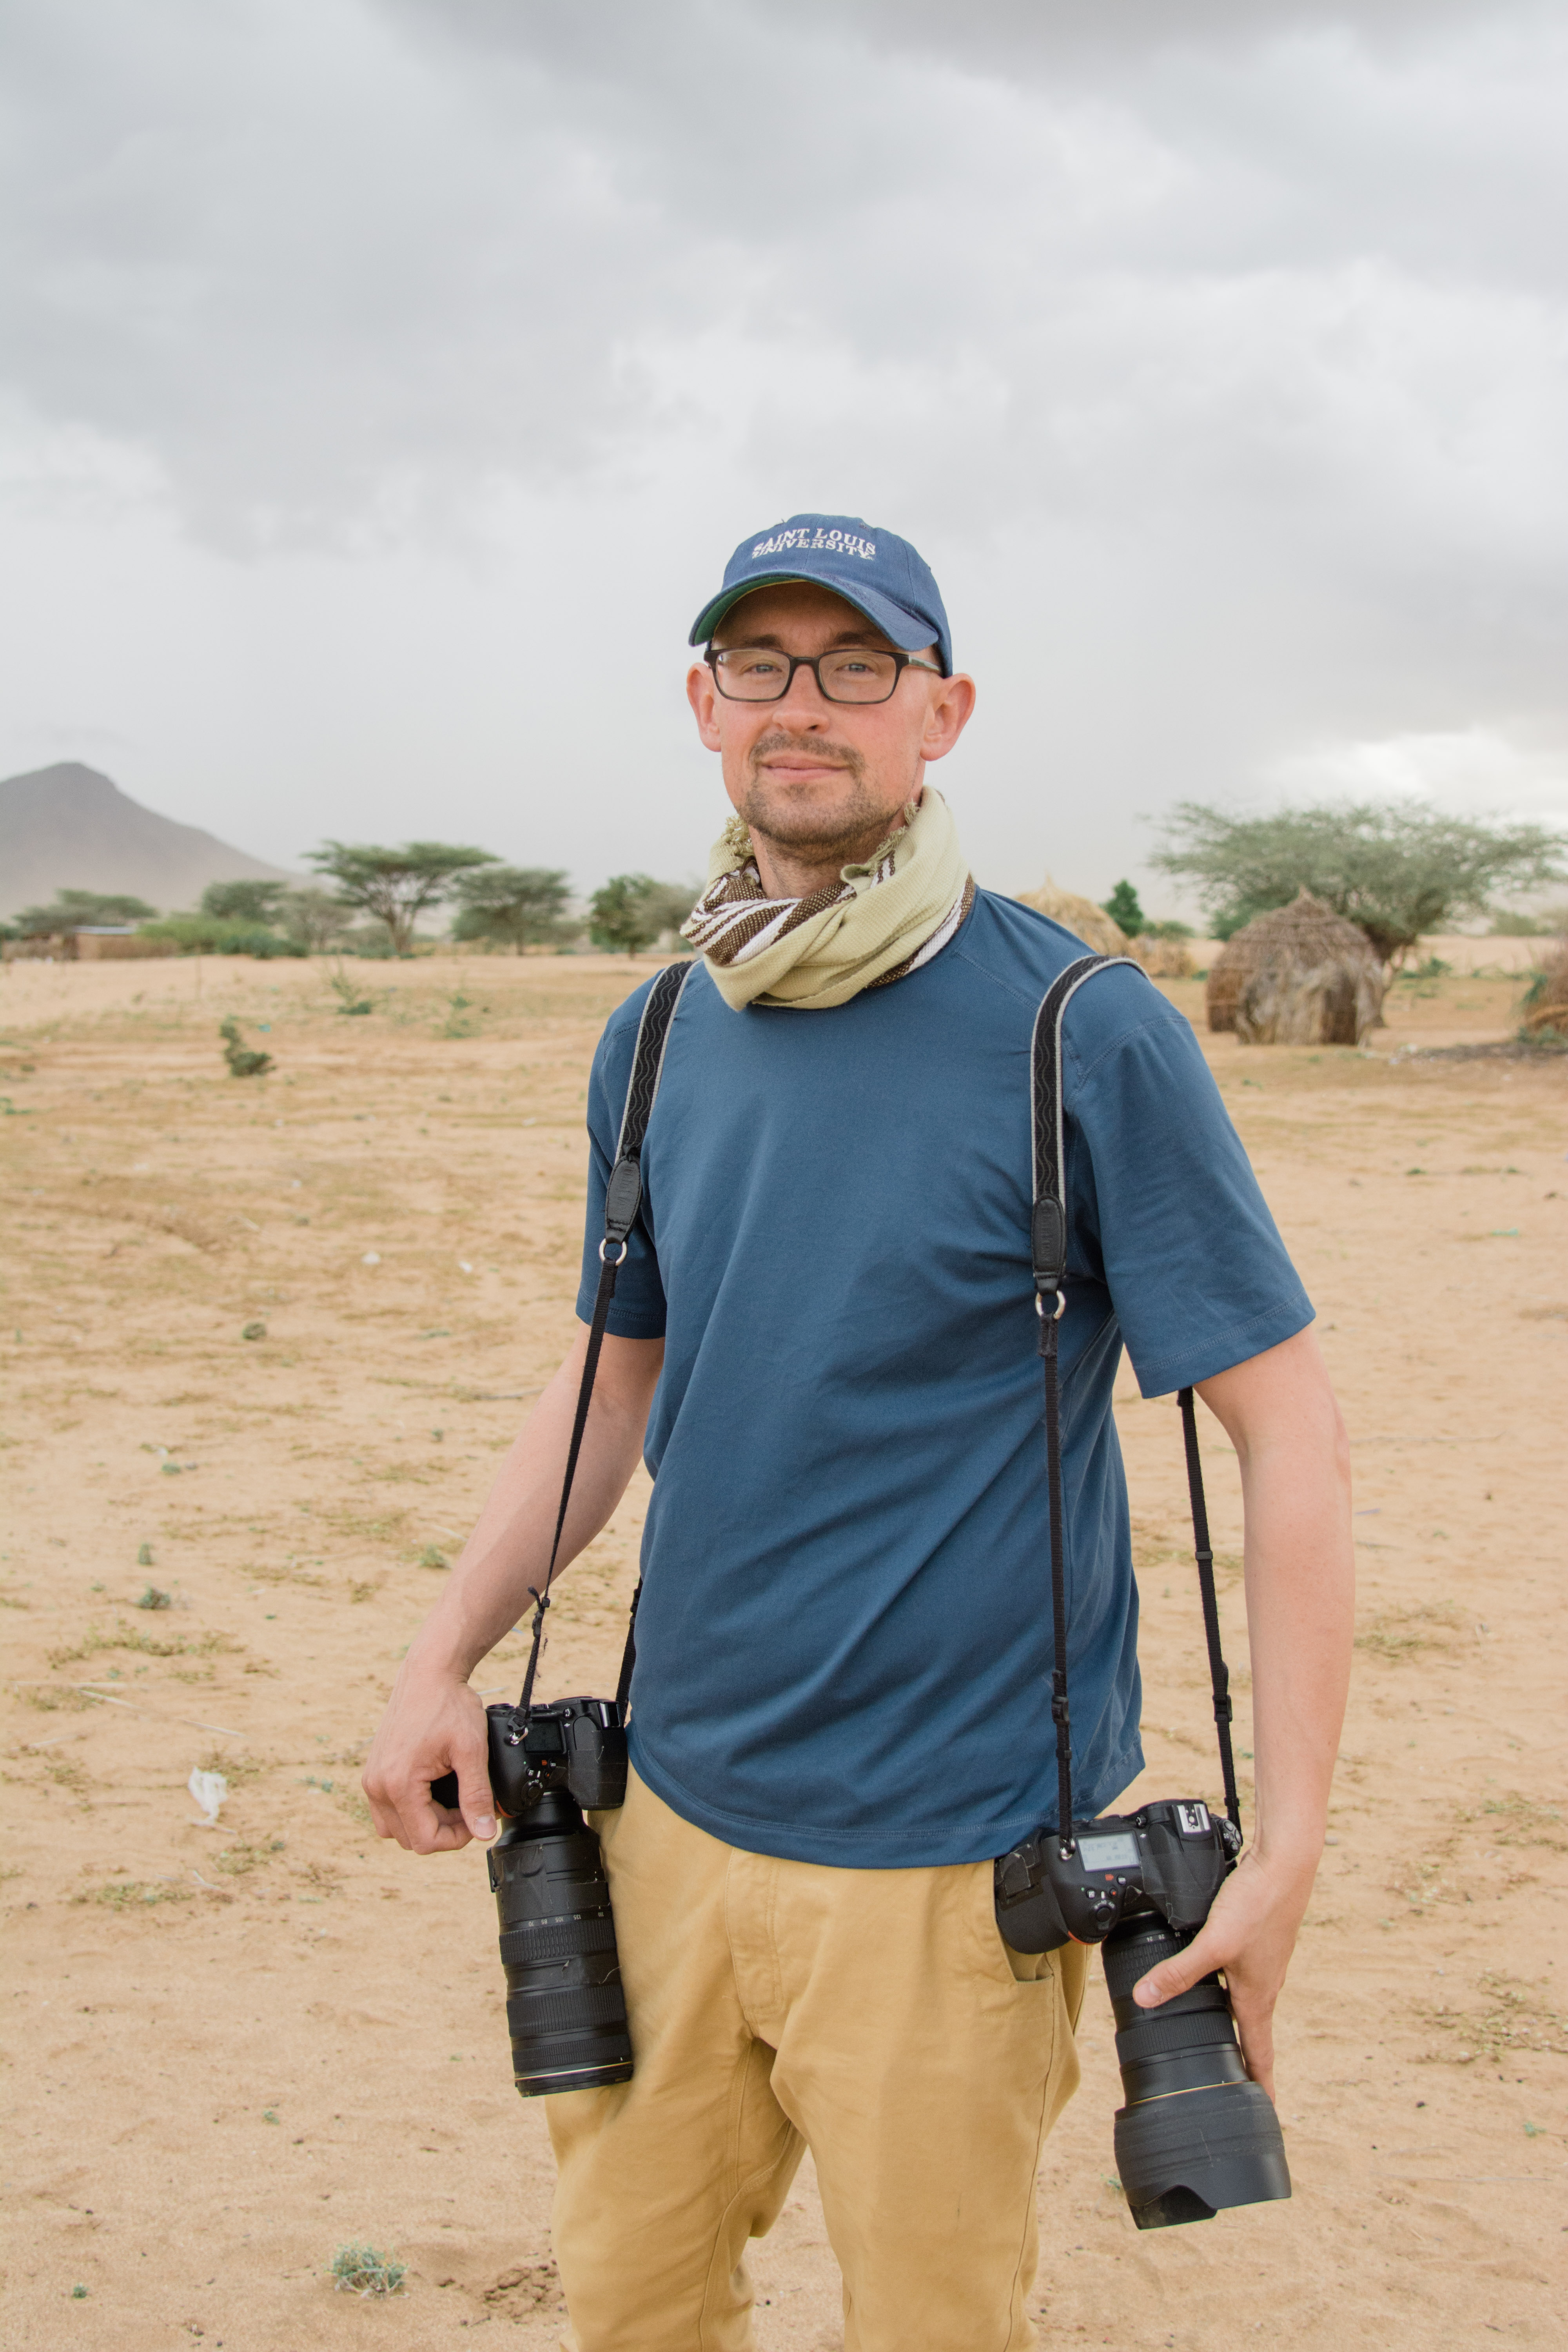 Erik Lunsford on location in Turkana, Kenya. Photo by Carlotta Cisternas Tiews. Used with permission.